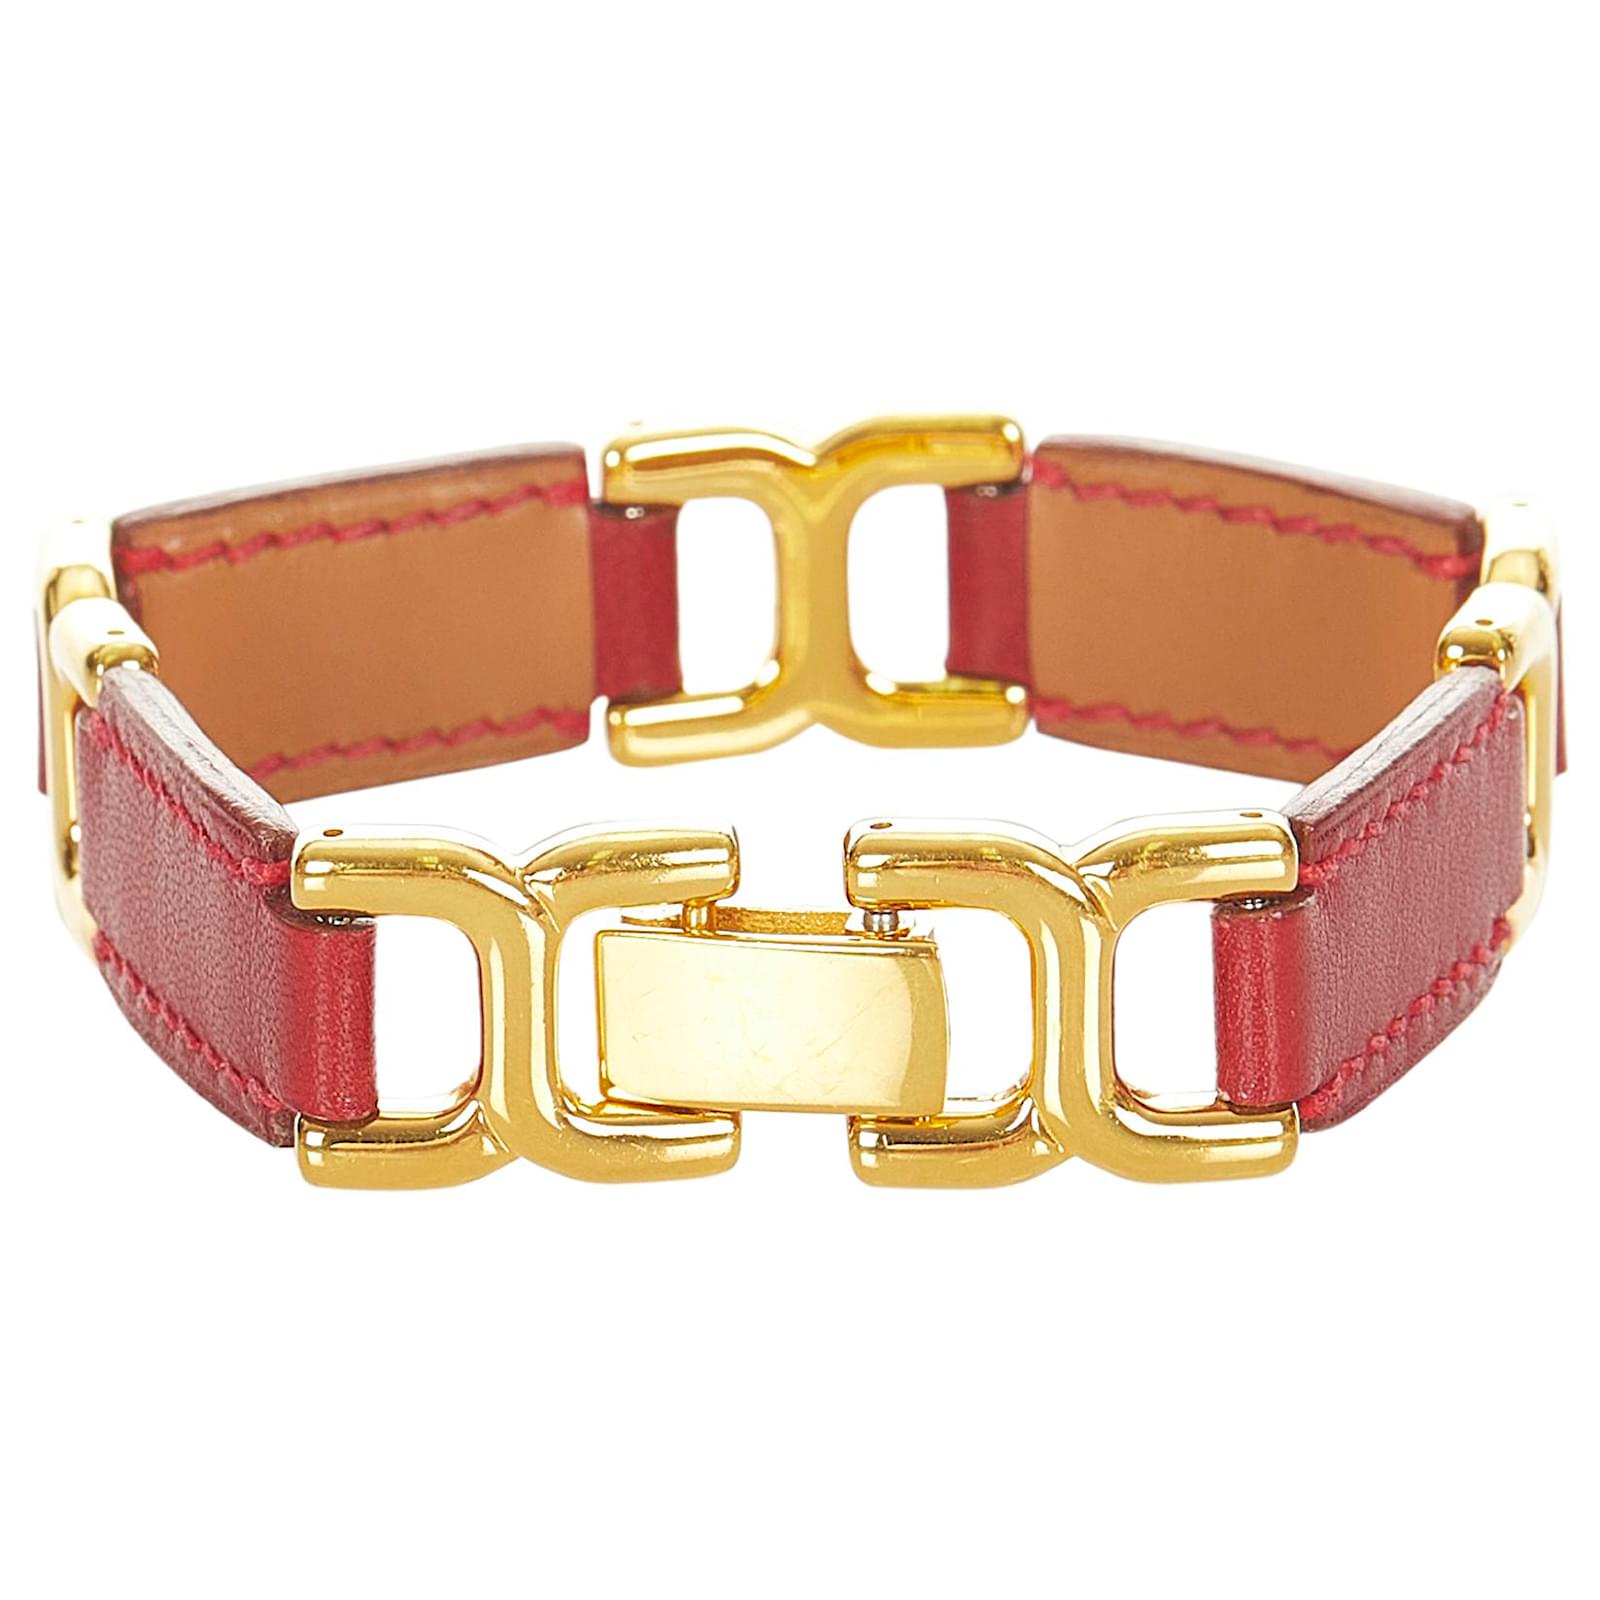 Hermes Dog Collar Epsom Leather Red Color